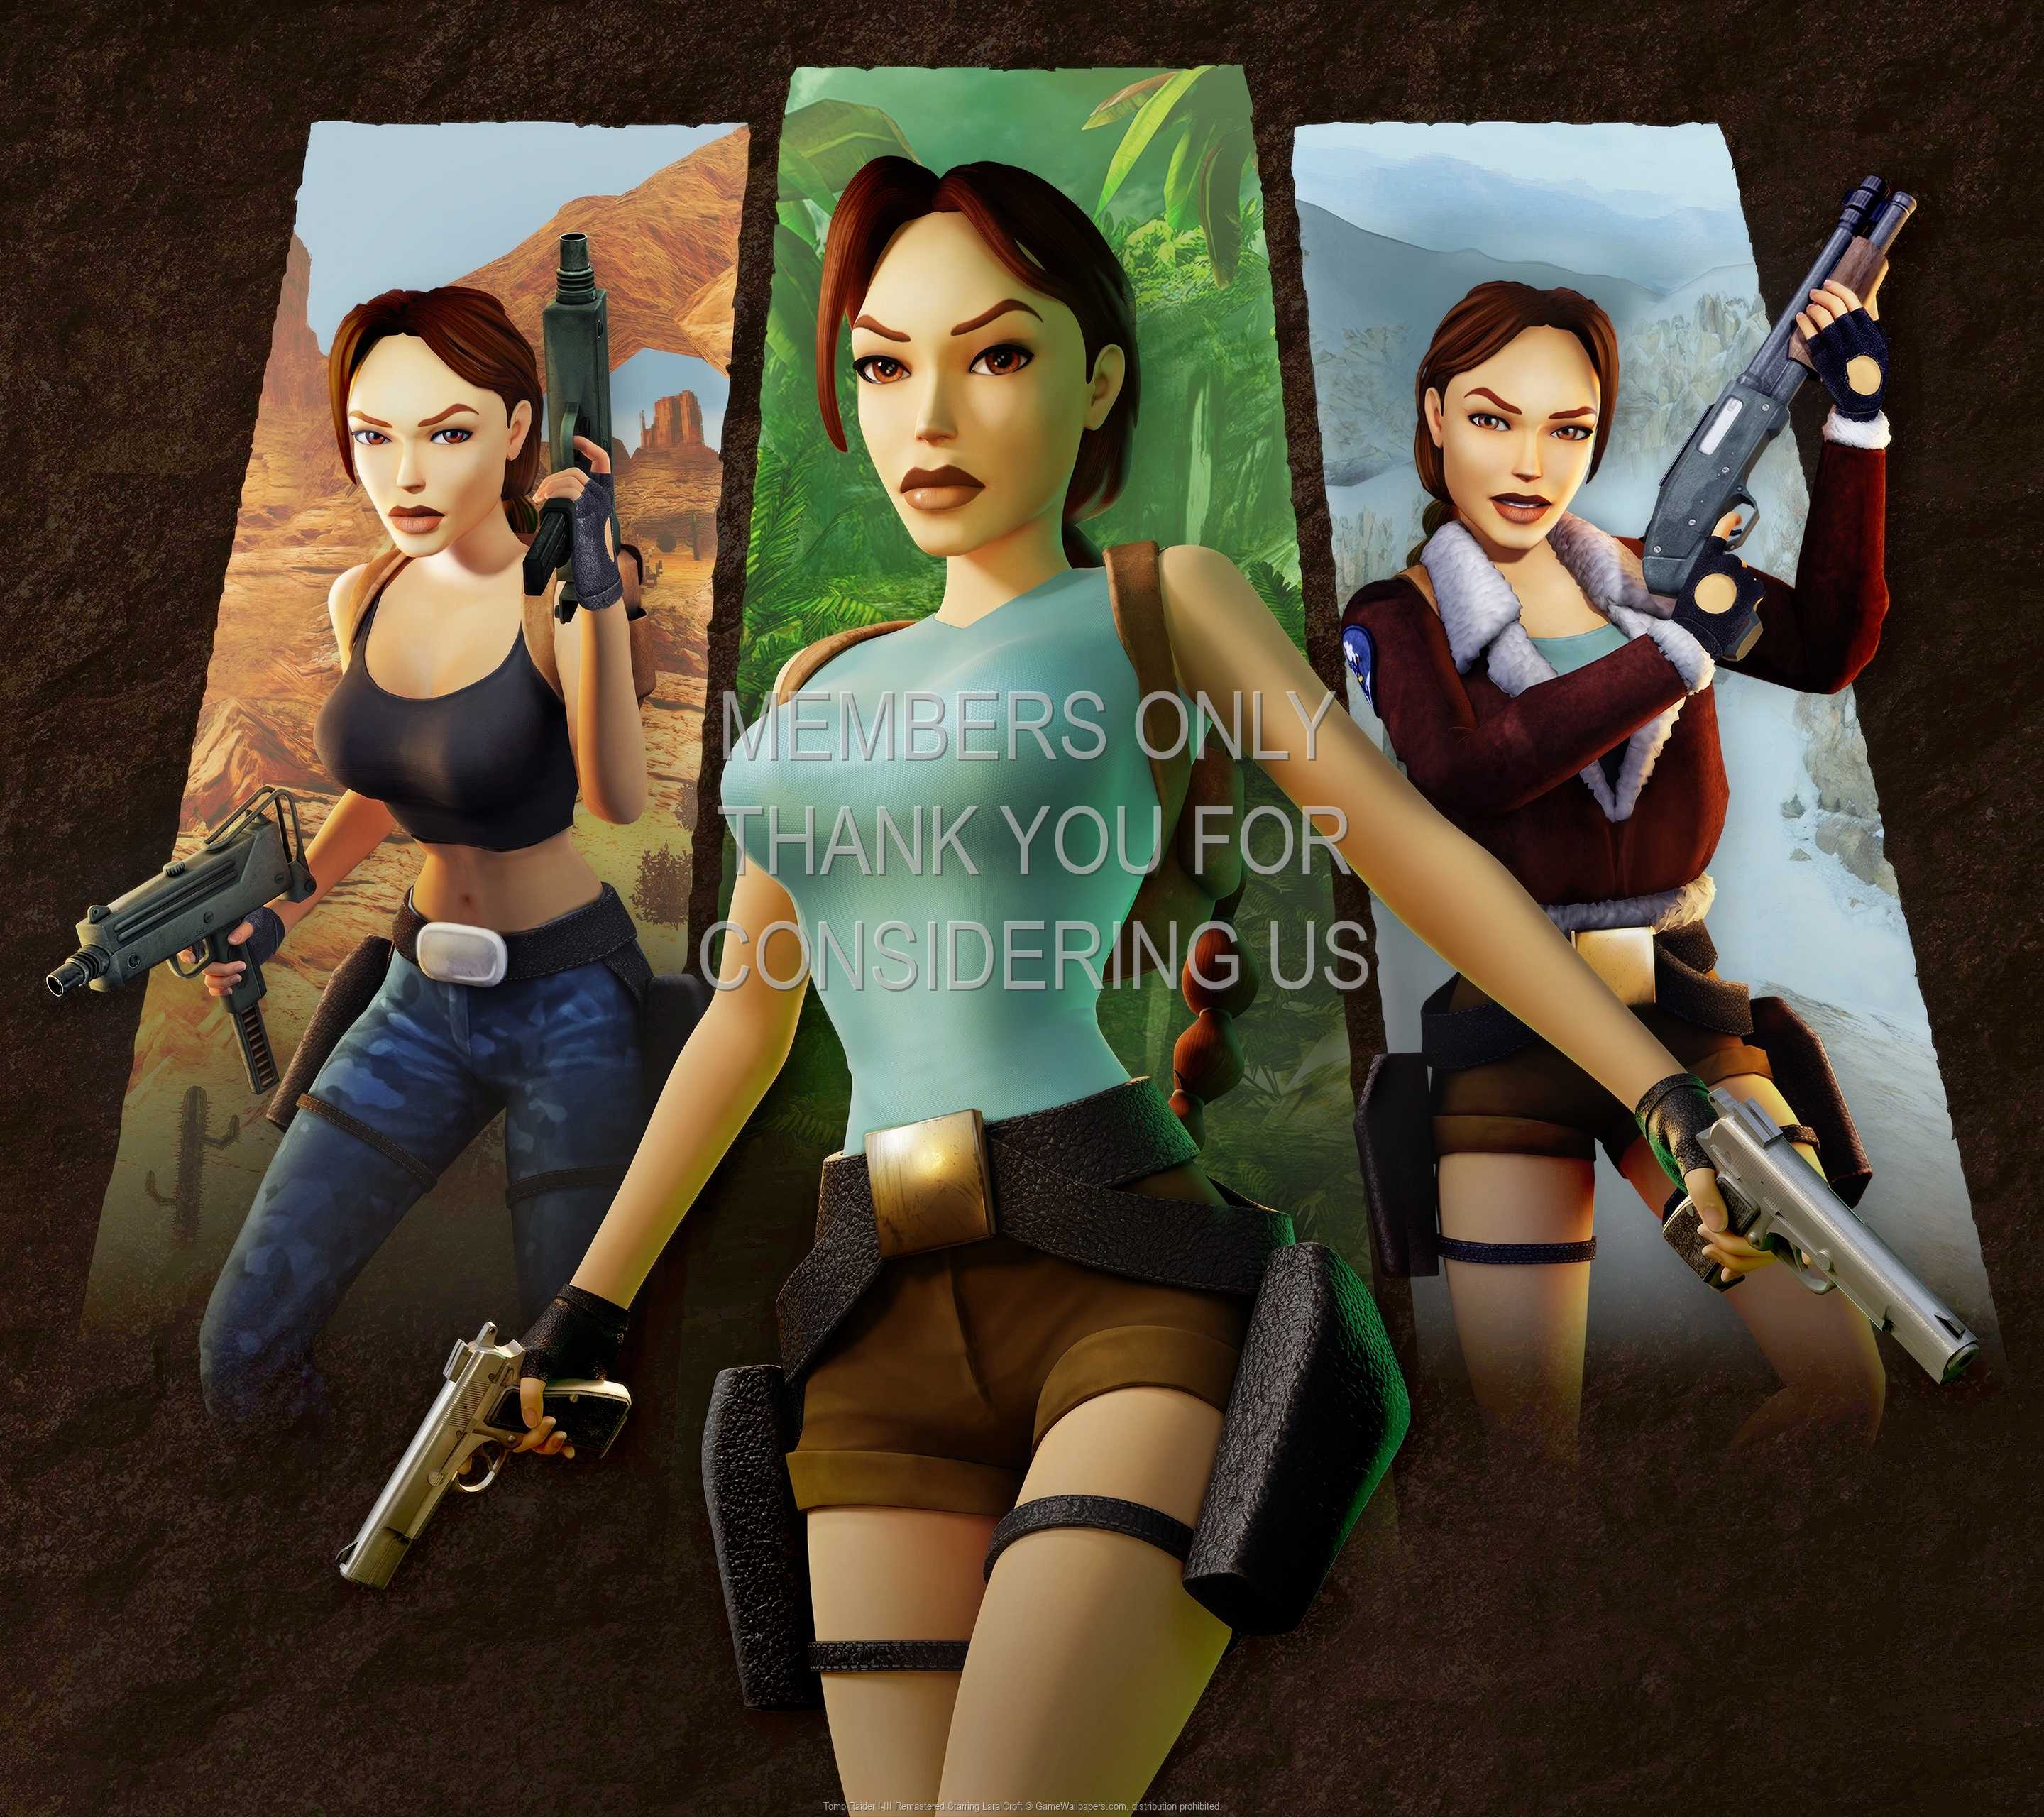 Tomb Raider I-III Remastered Starring Lara Croft 1440p Horizontal Mobile wallpaper or background 01